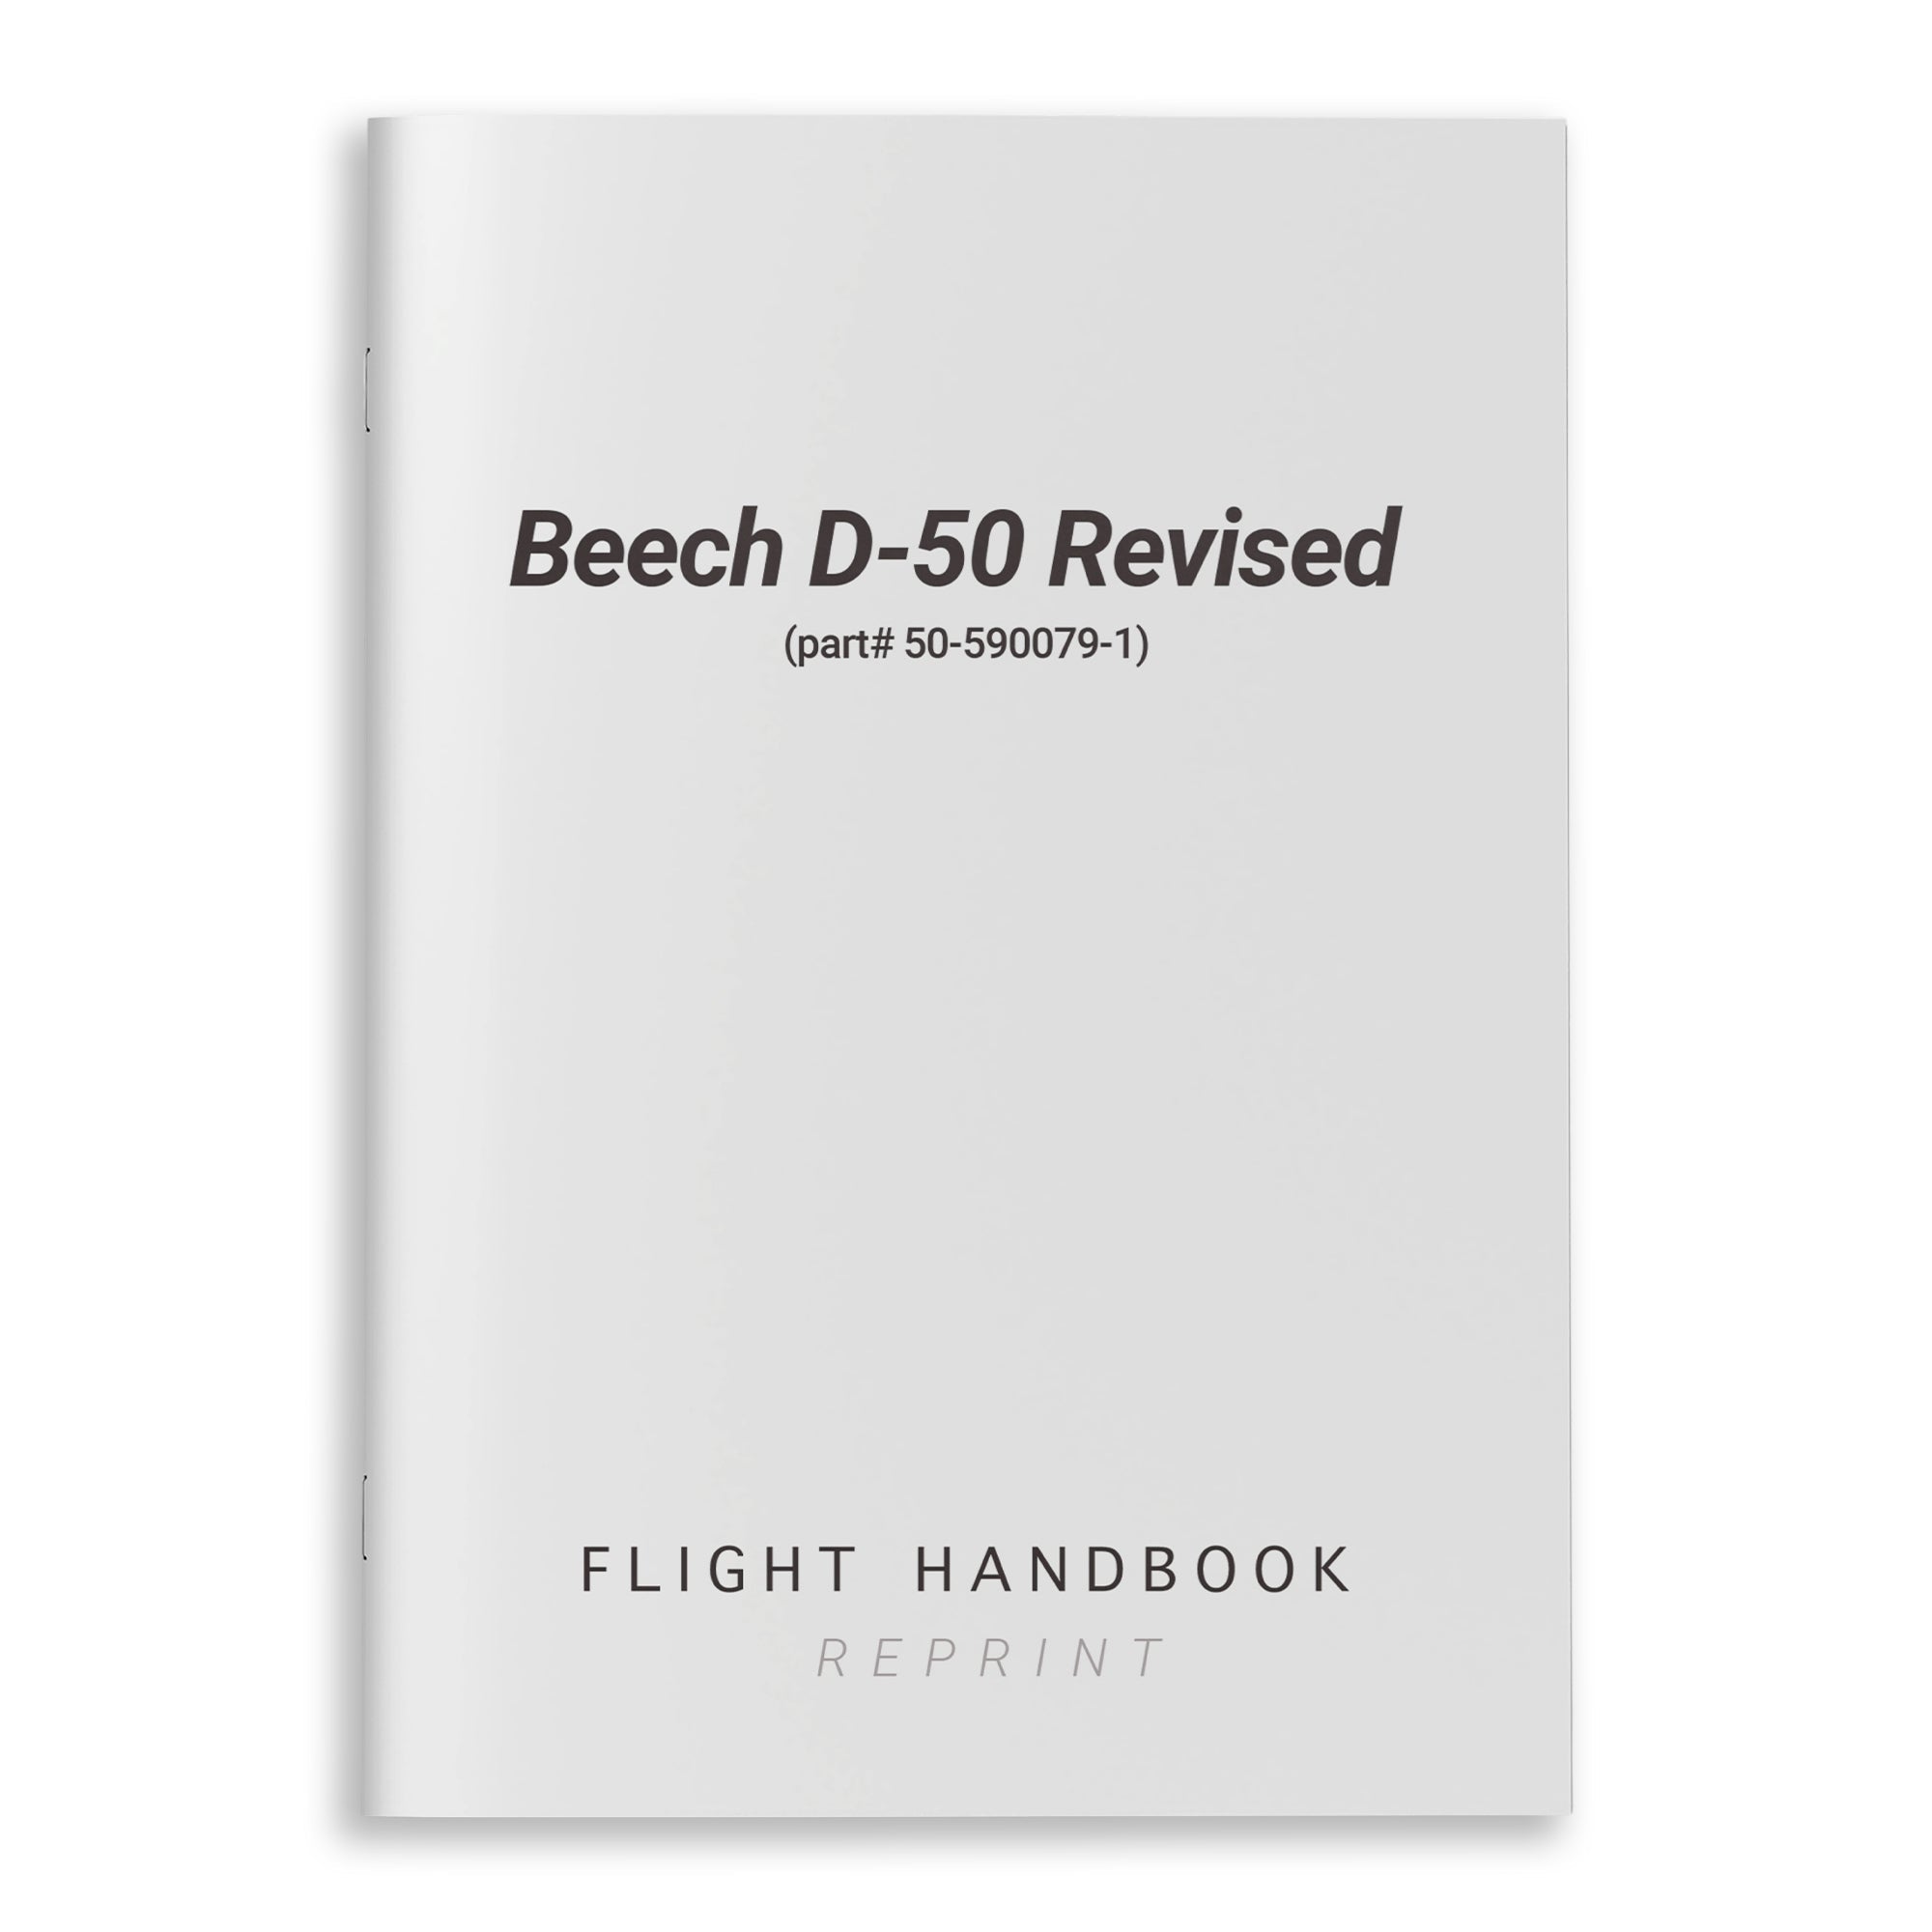 Beech D-50 Revised Flight Handbook (part# 50-590079-1) - PilotMall.com